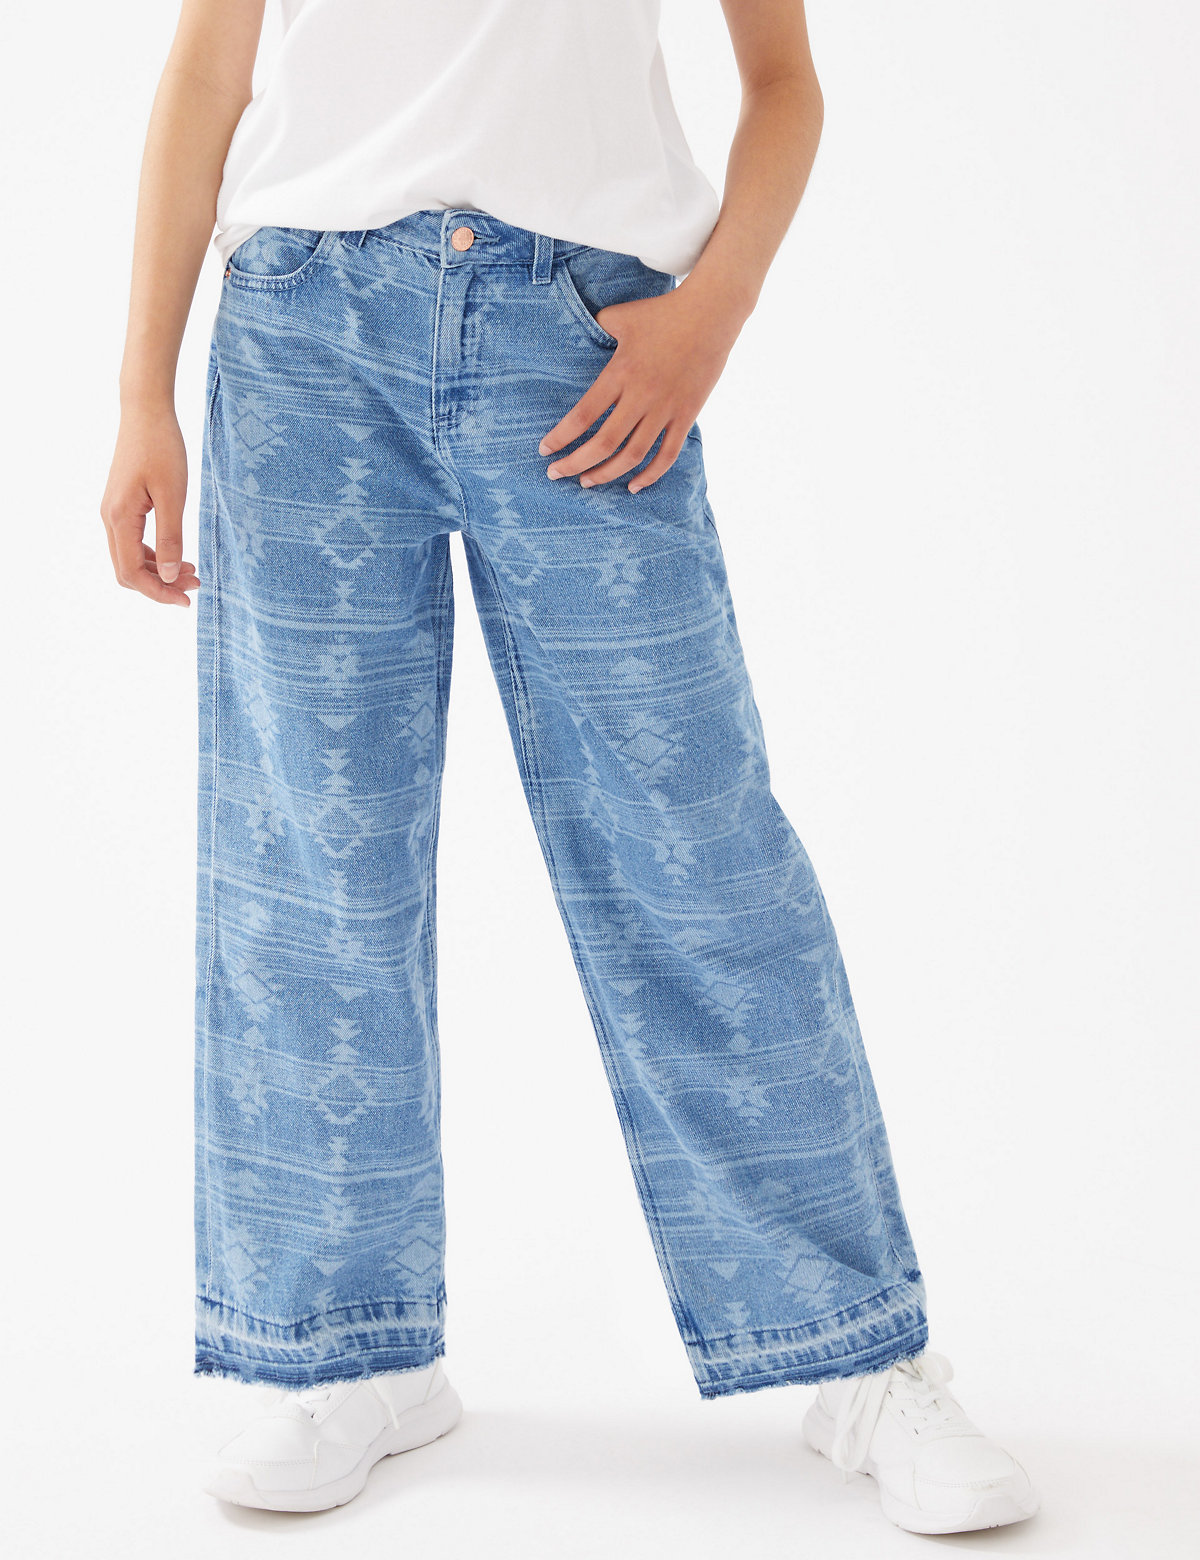 Wide Leg Patterned Denim Jeans (6-16 Yrs)